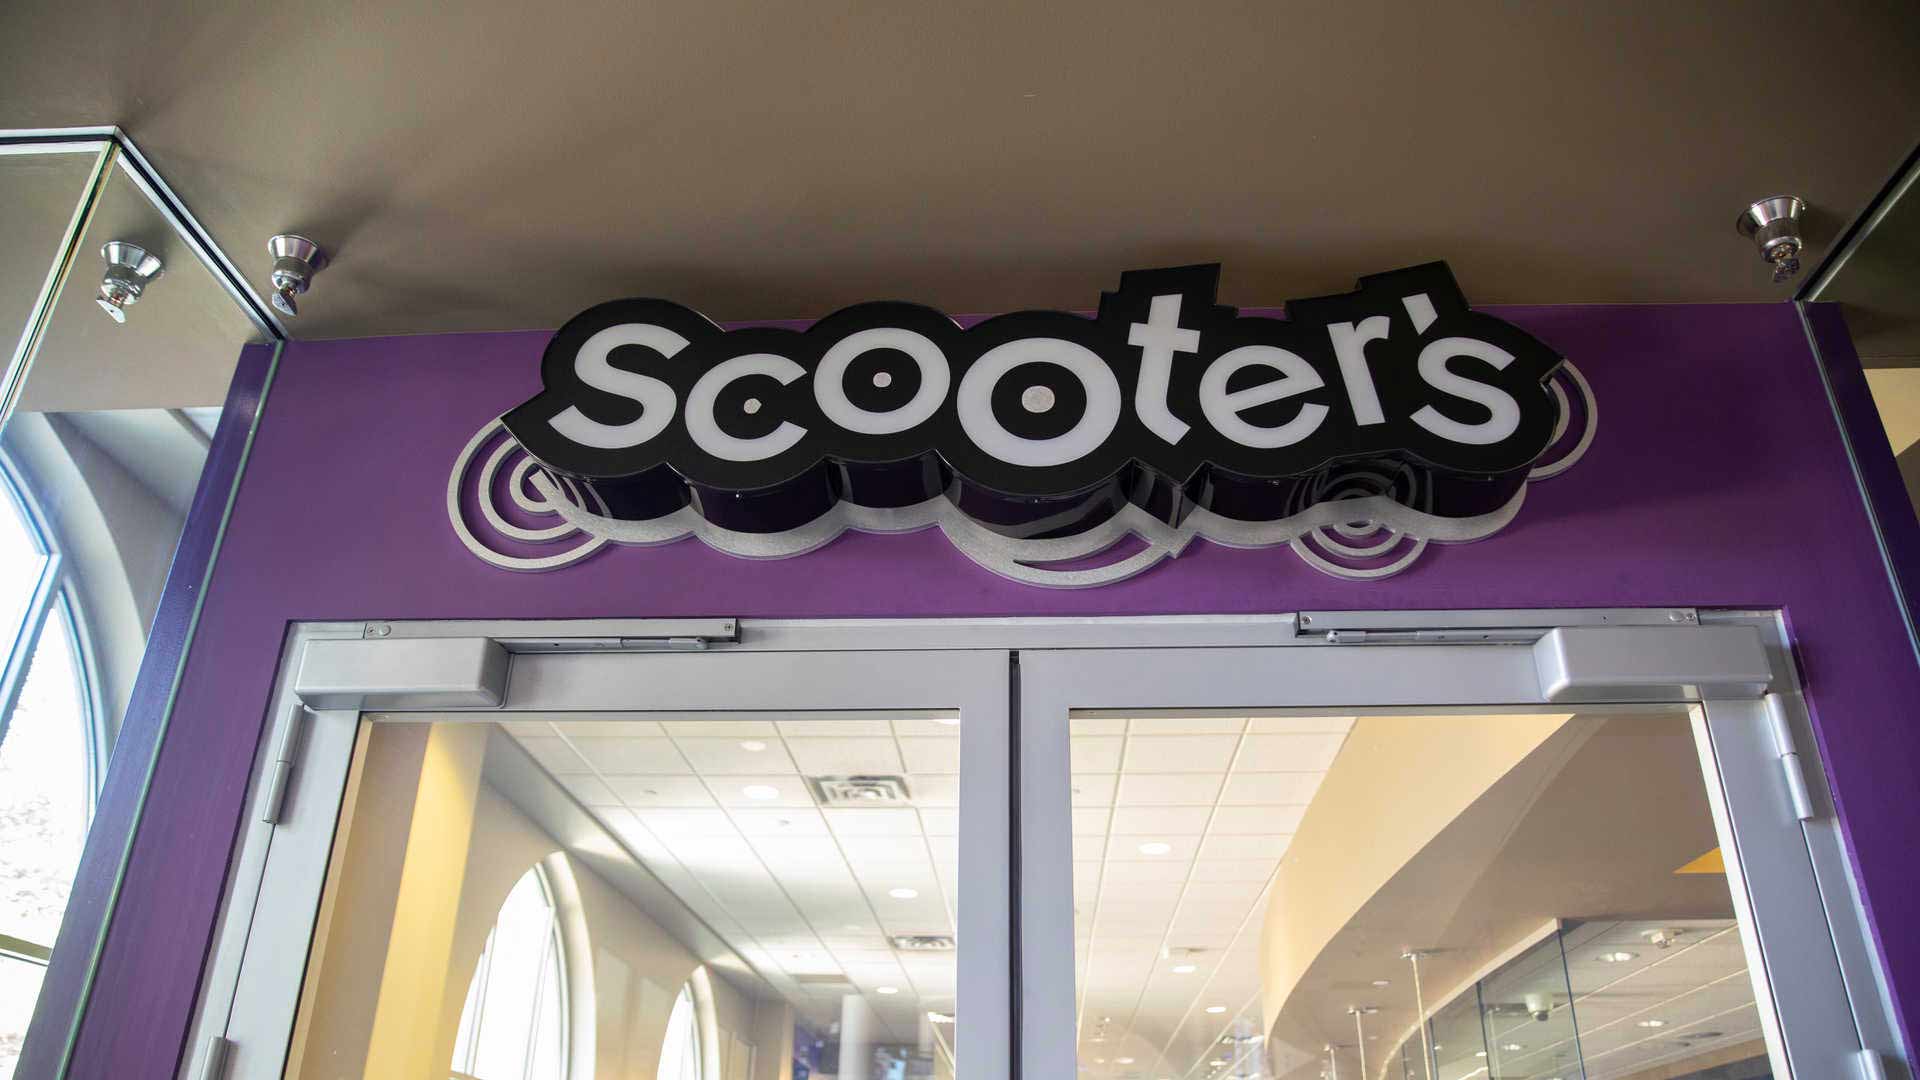 Scooters signage above door